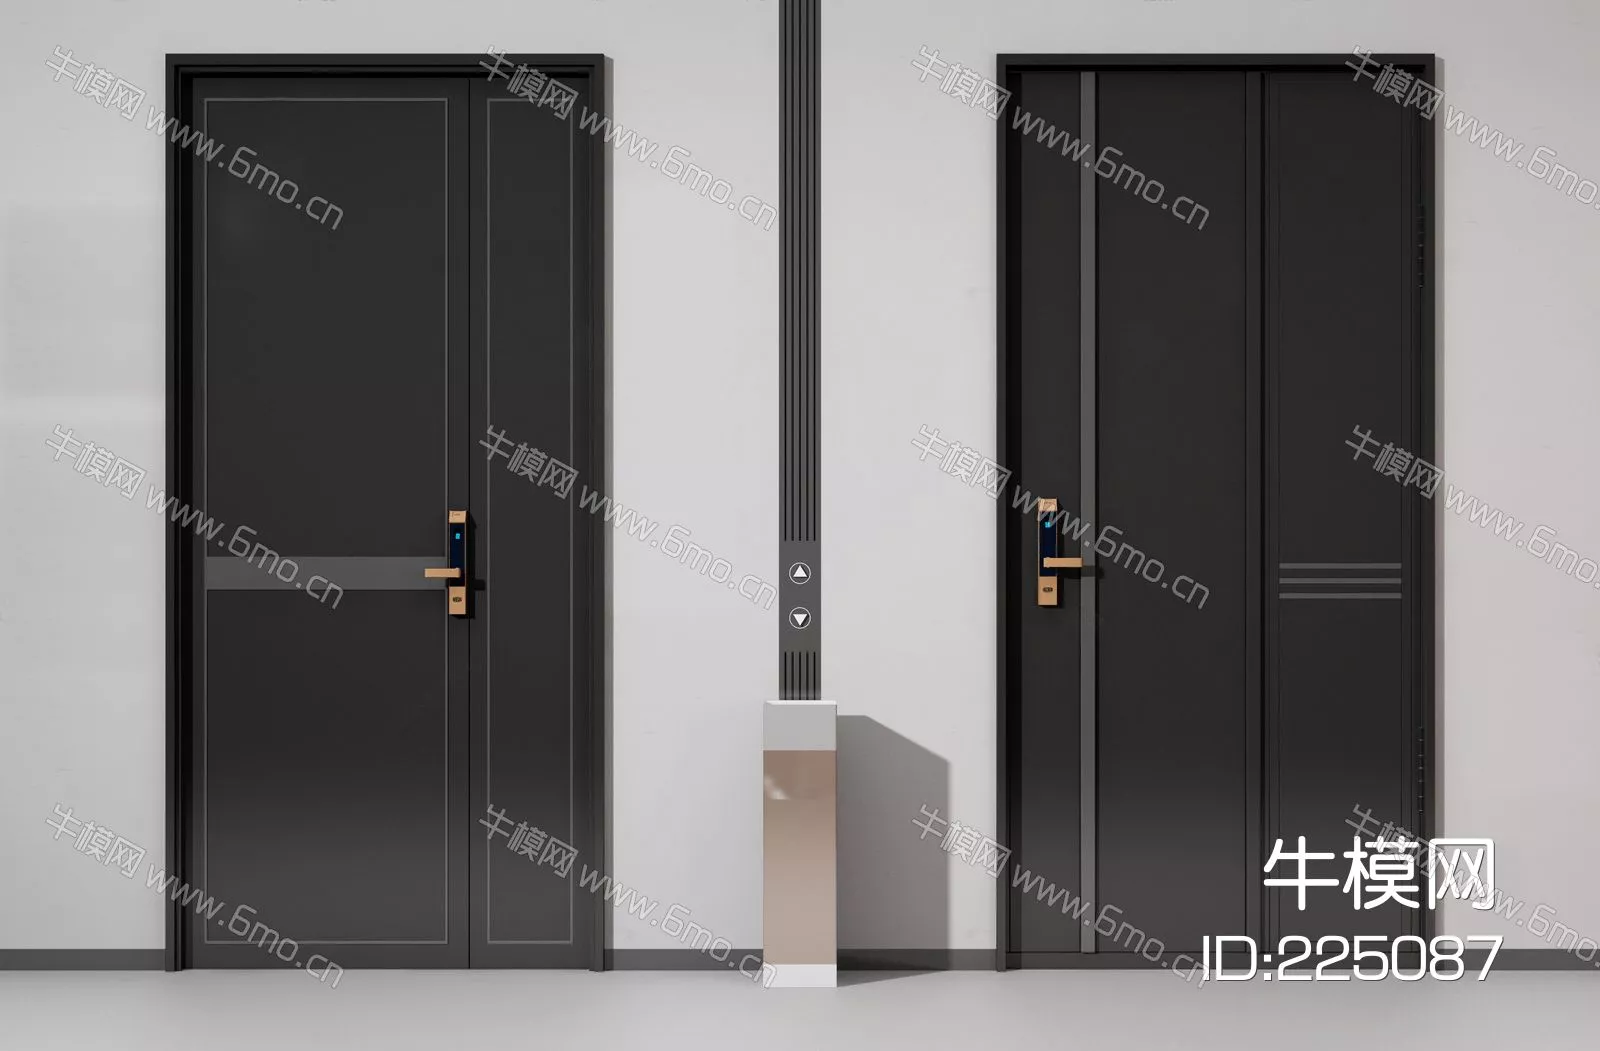 MODERN DOOR AND WINDOWS - SKETCHUP 3D MODEL - ENSCAPE - 225087